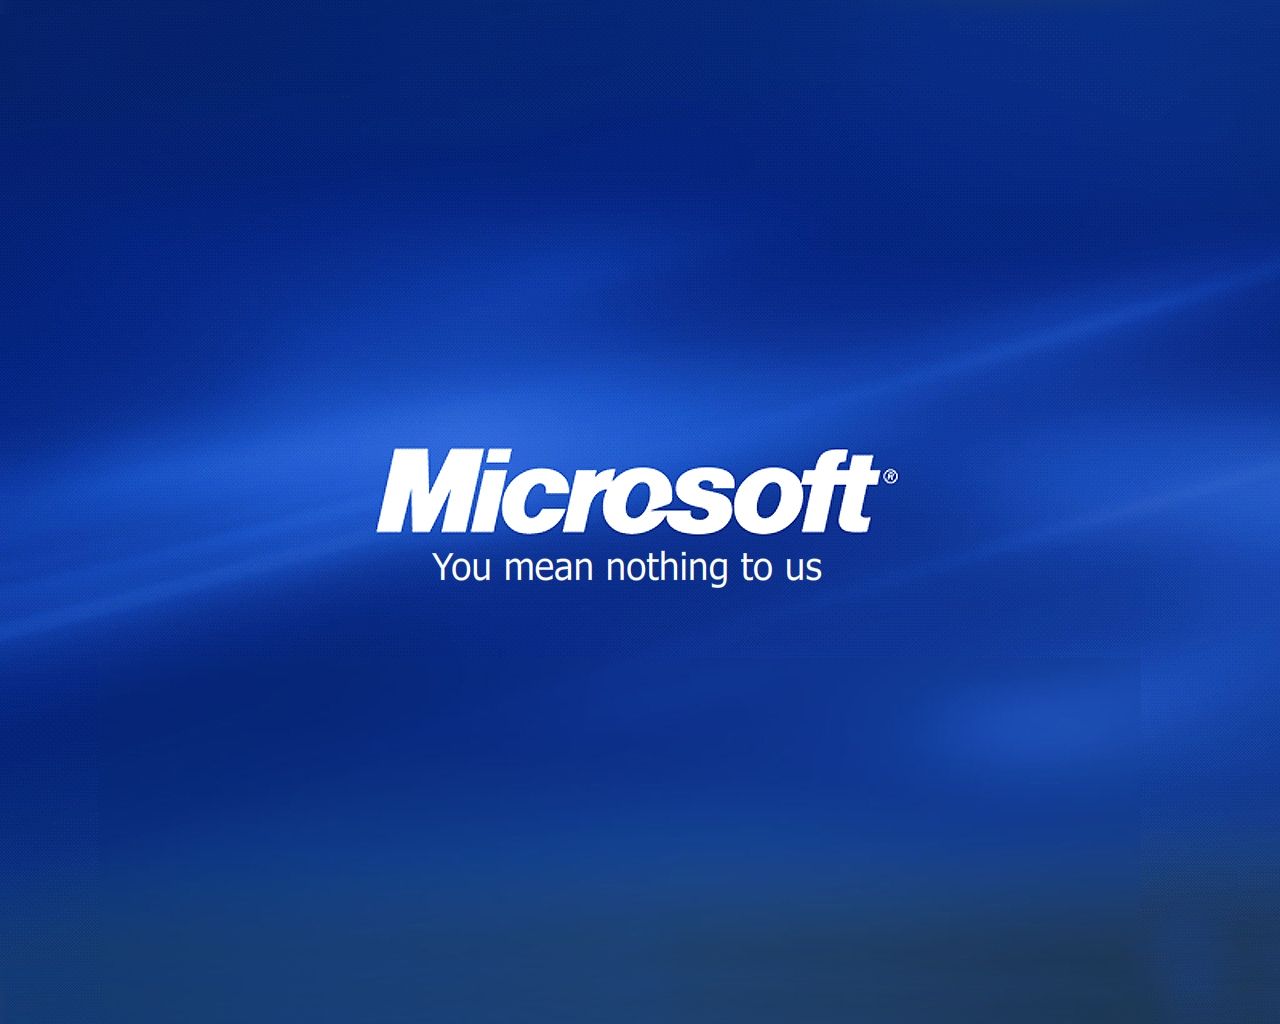 Free-Microsoft-Desktop-Wallpaper-Pictures.jpg